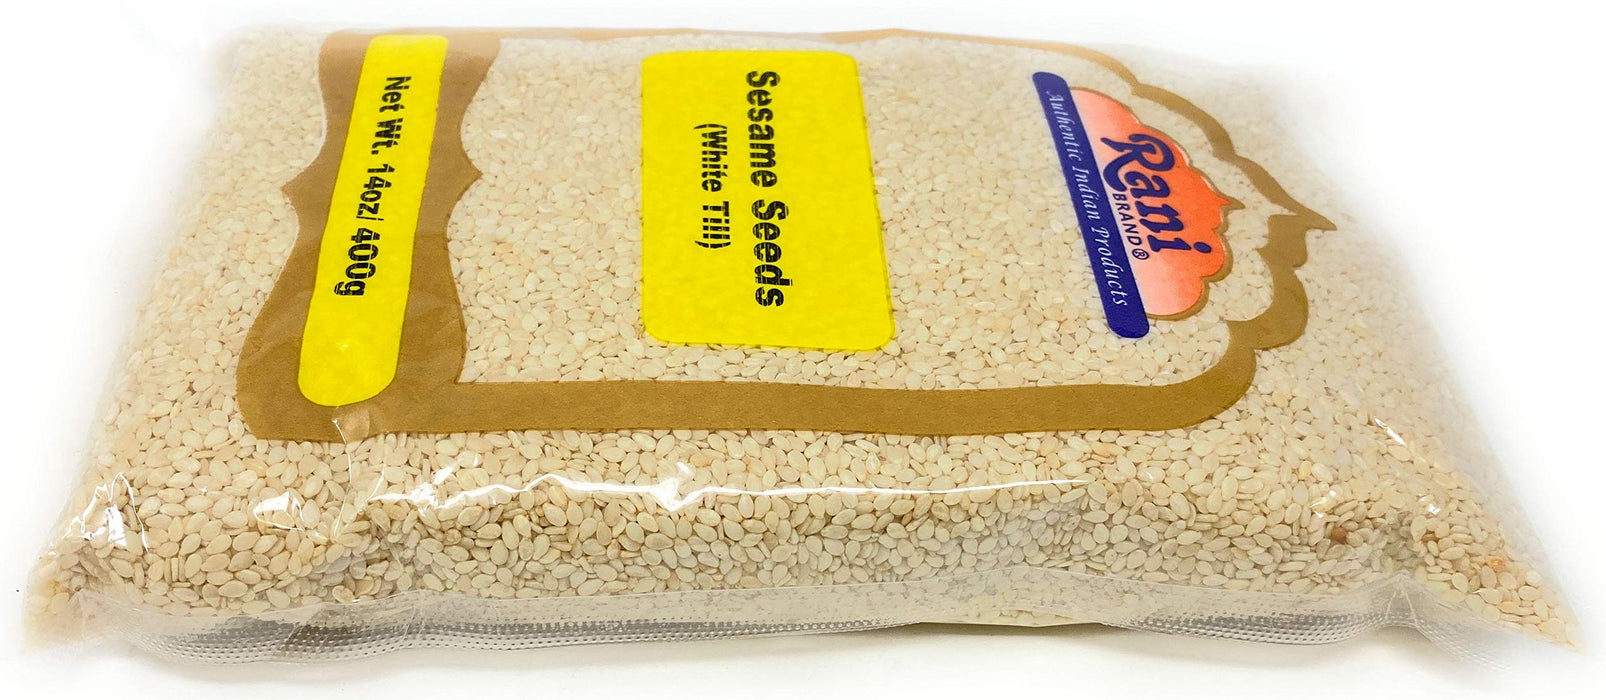 Rani Sesame Seeds White (Till) 14oz (400gm) ~ All Natural | Gluten Free Ingredients | NON-GMO | Vegan | Indian Origin